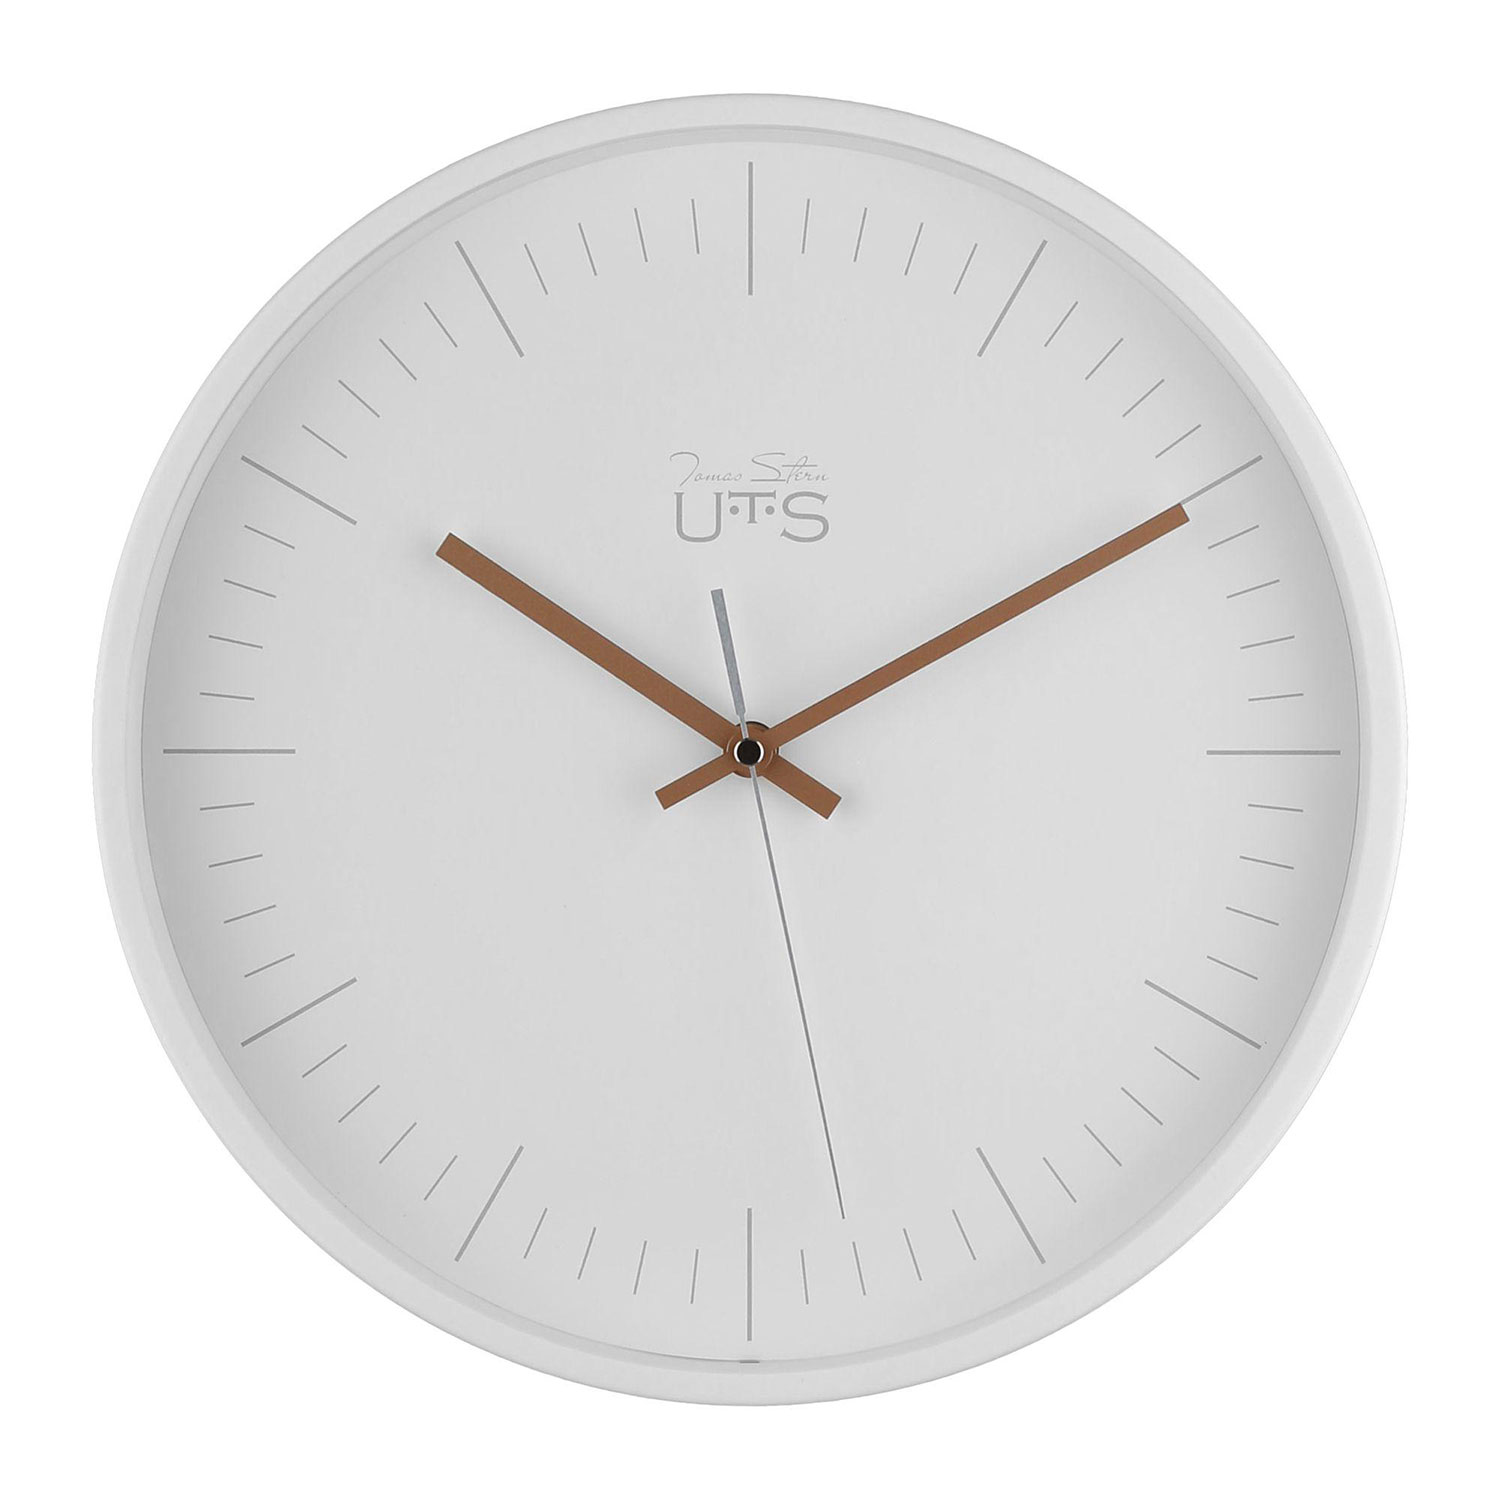 Настенные часы Tomas Stern TS-6126 настенные часы 18x53 см tomas stern 9040 цвет коричневый